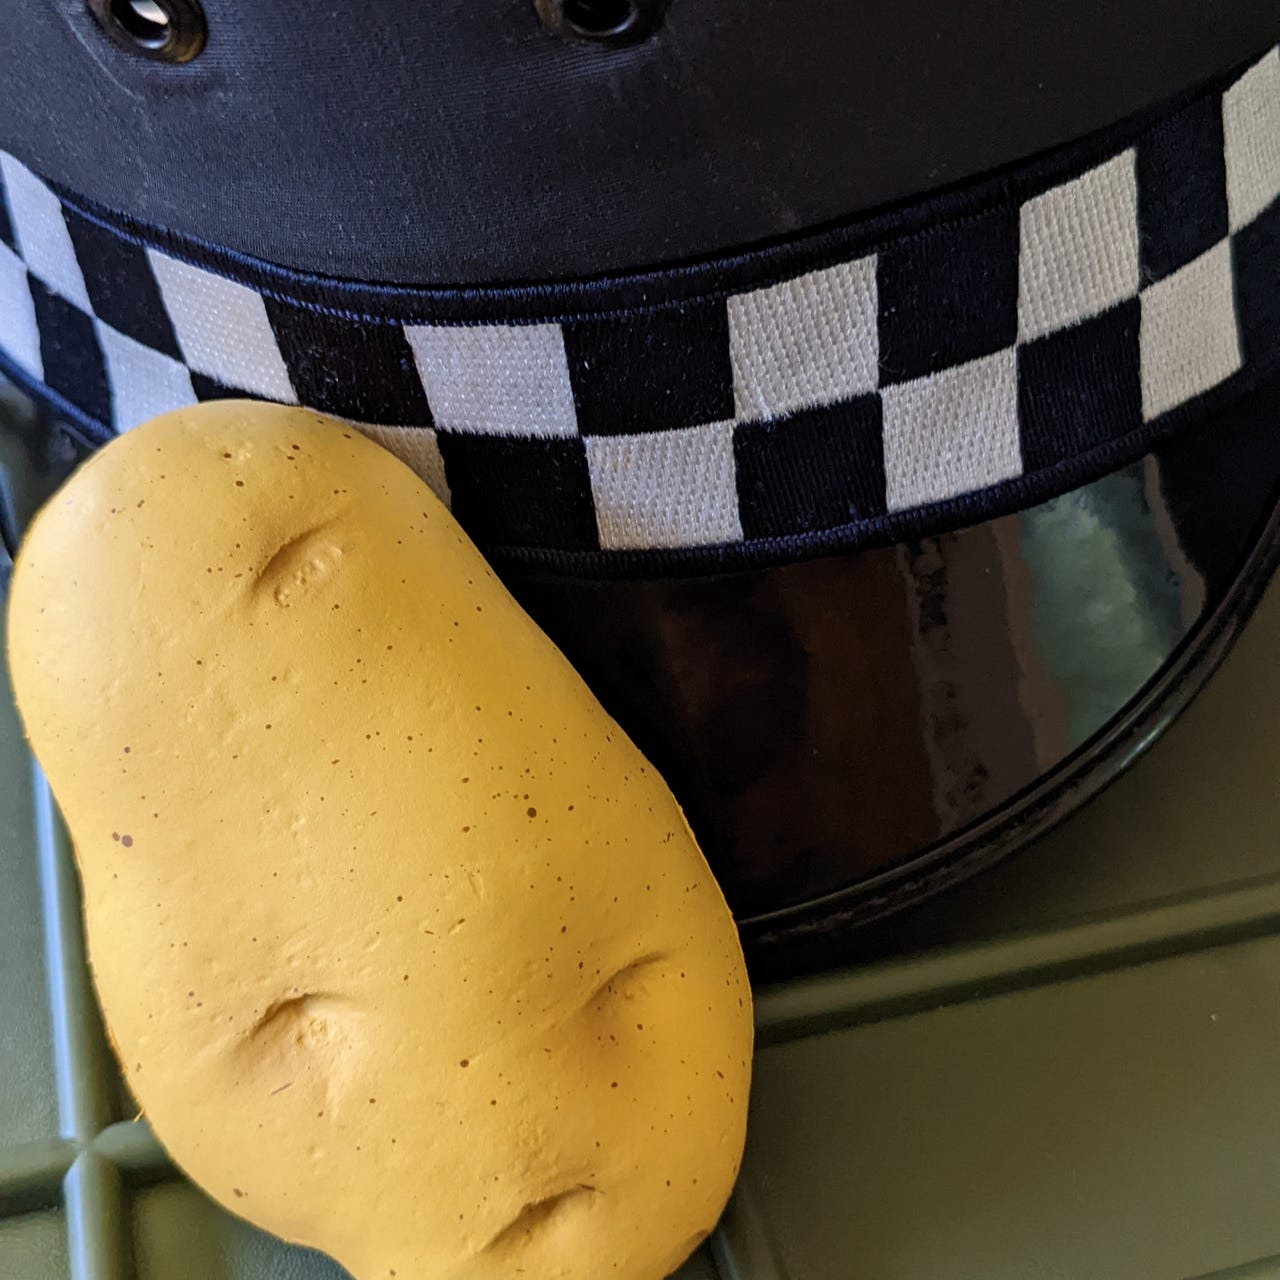 PO Potatoes- The musings of a crime fighting Potato